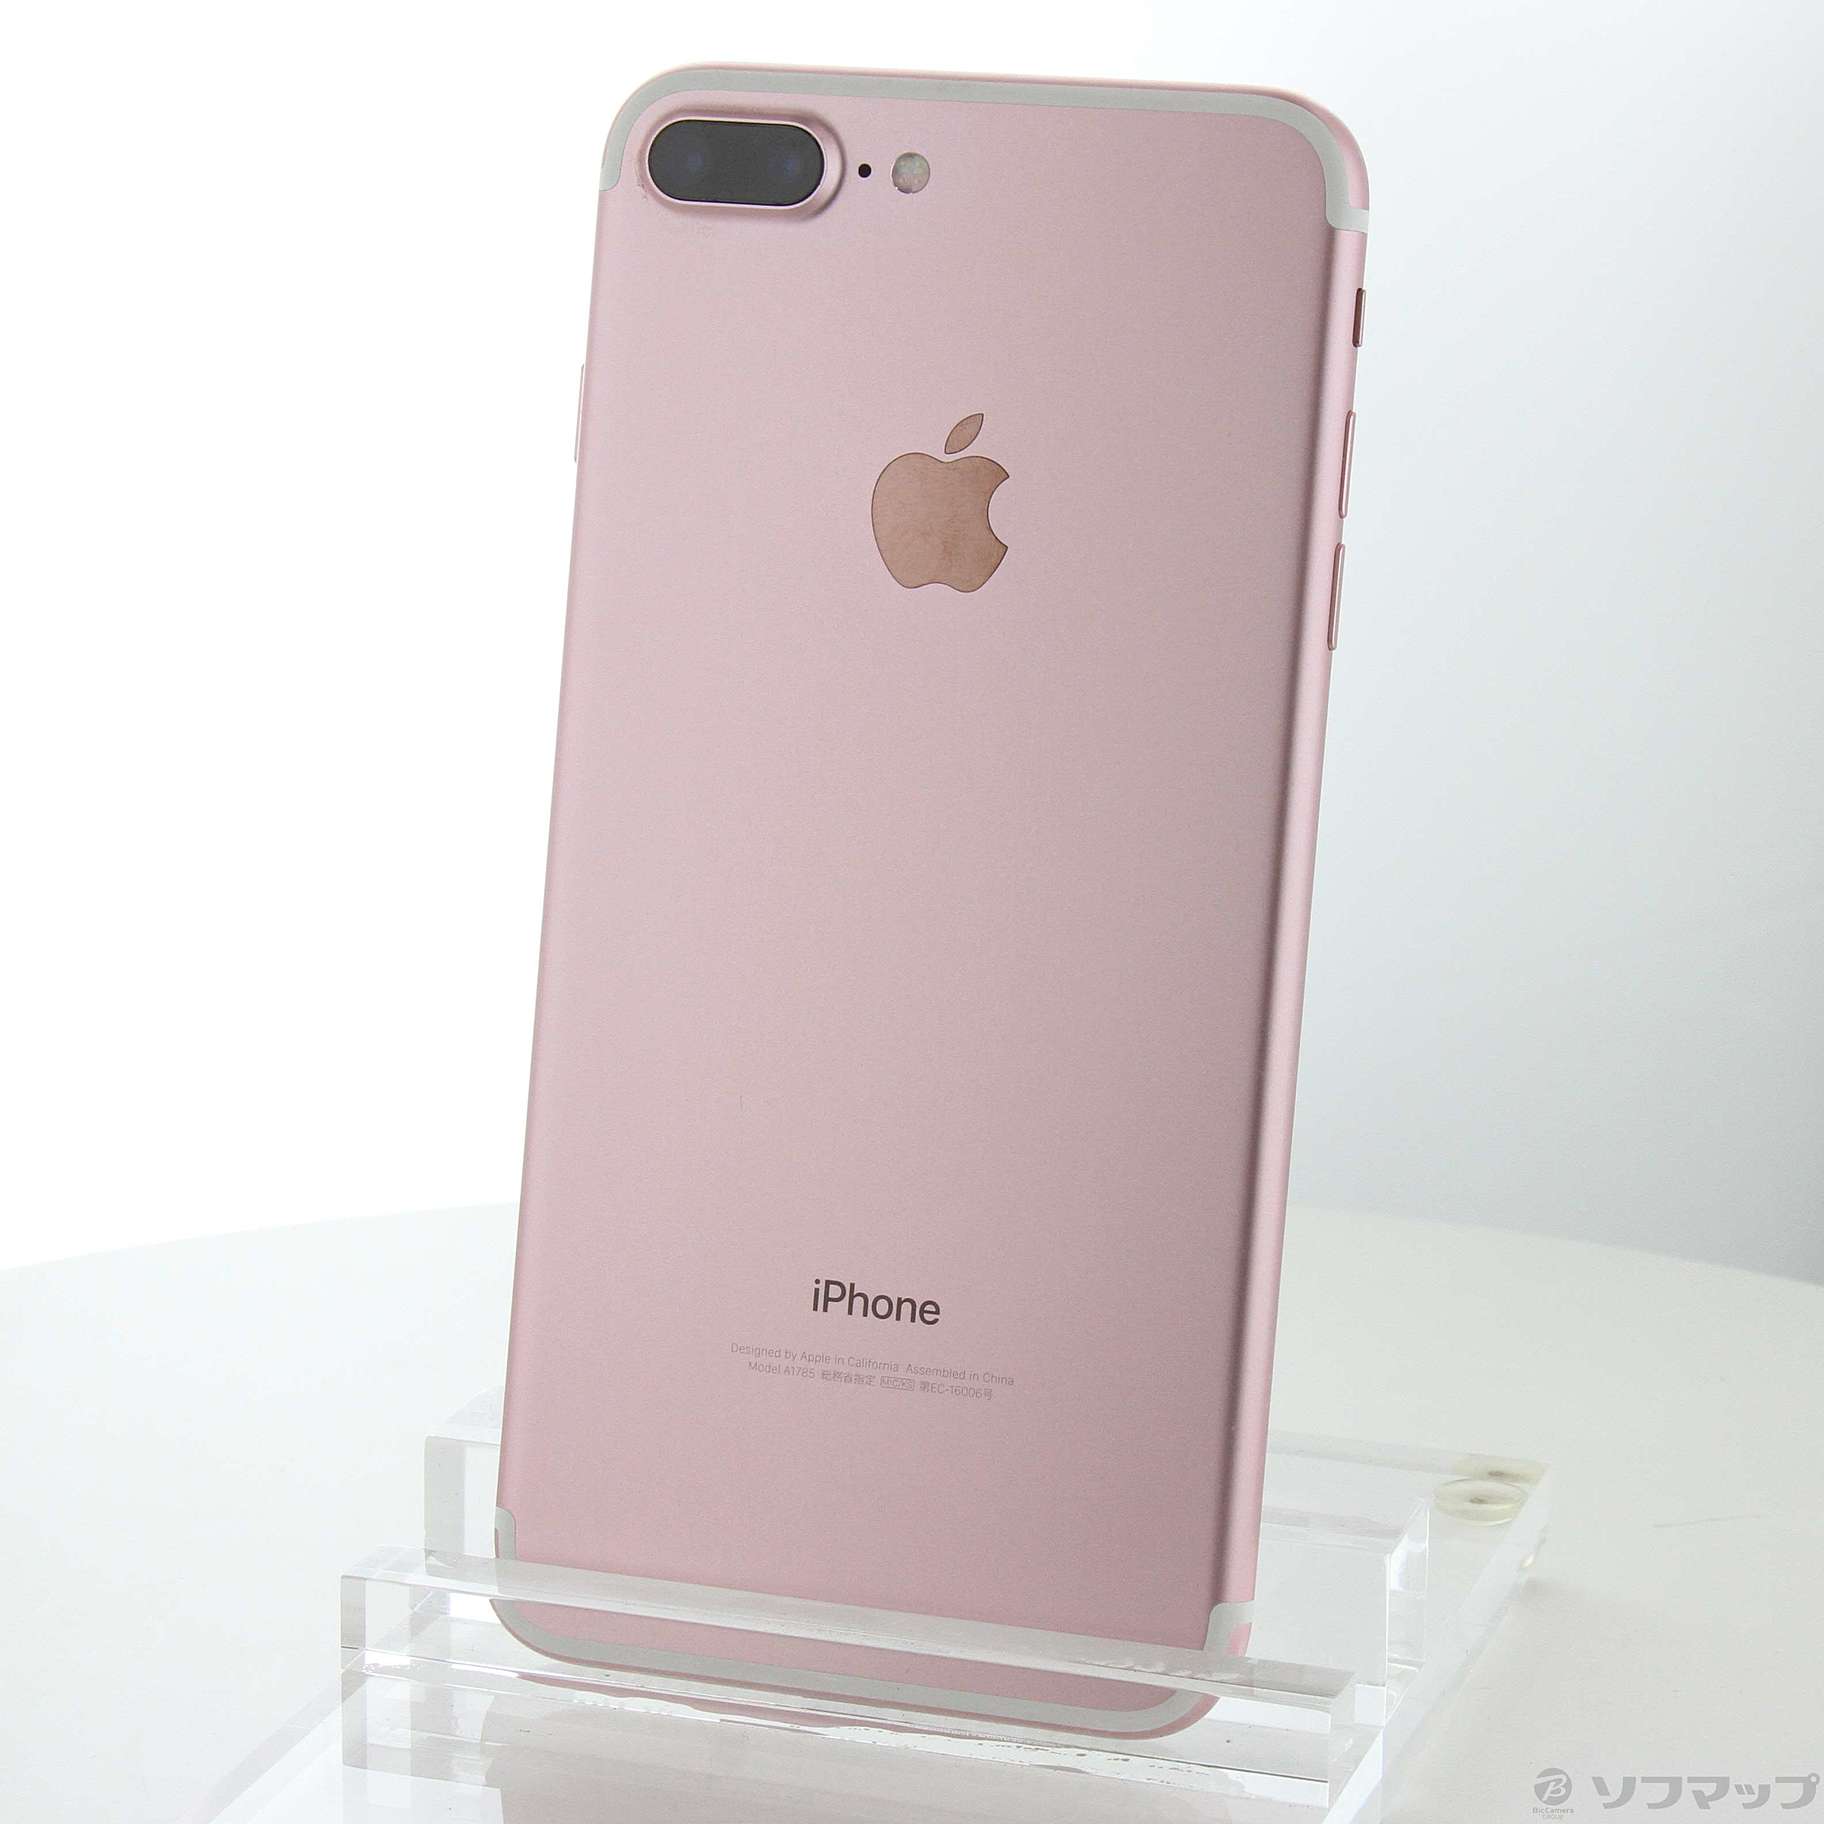 iPhone 7 Plus  SIMフリー Rose Gold  128G